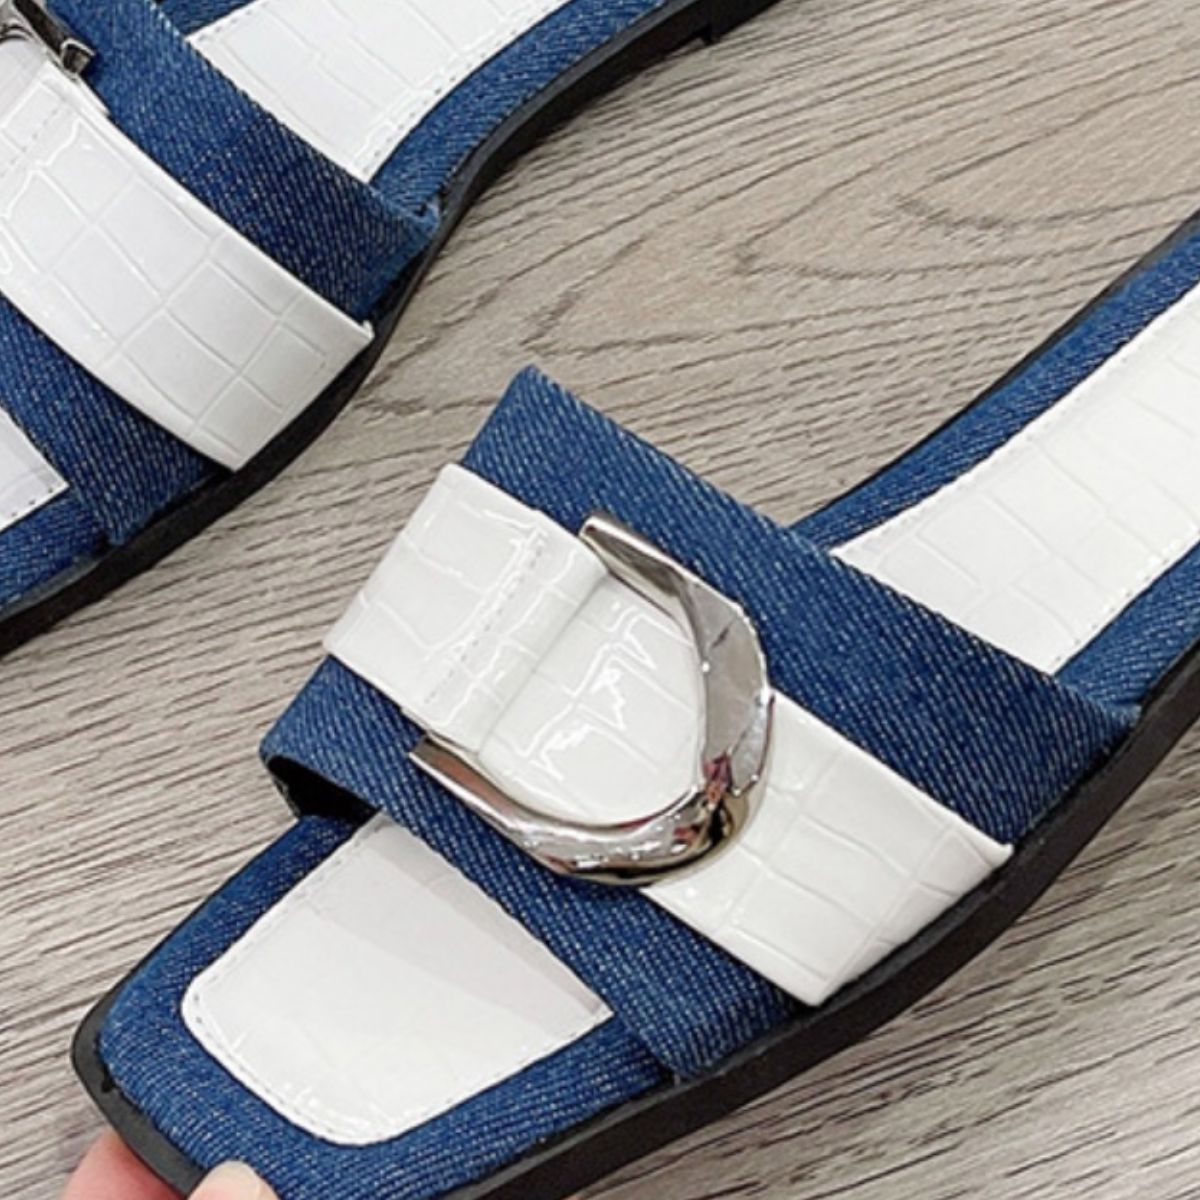 TEEK - Buckle Trim Open Toe Sandals SHOES TEEK Trend   